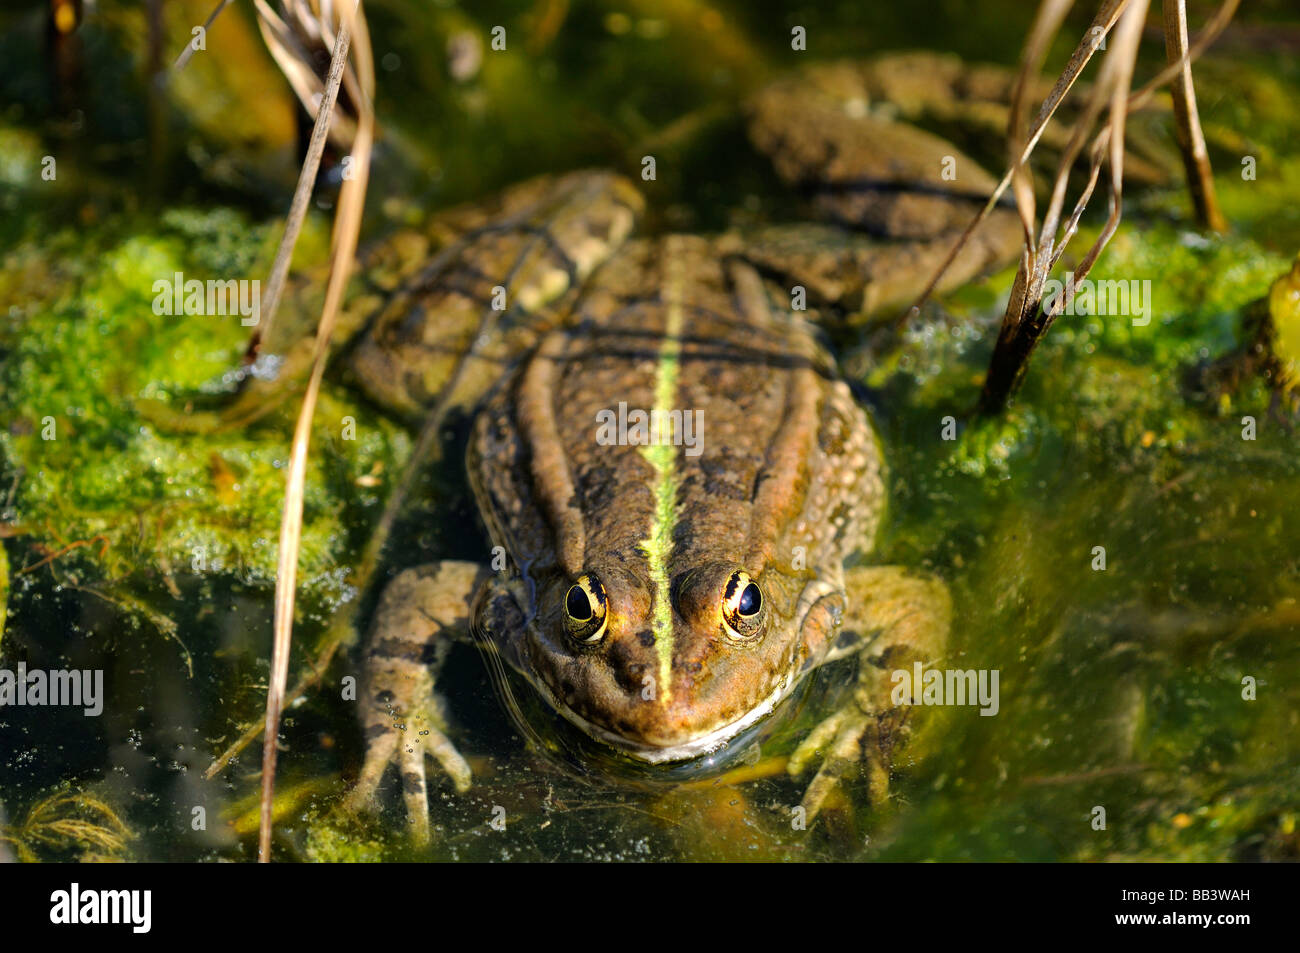 Rana verde, acqua rana Rana esculenta di kl Foto Stock